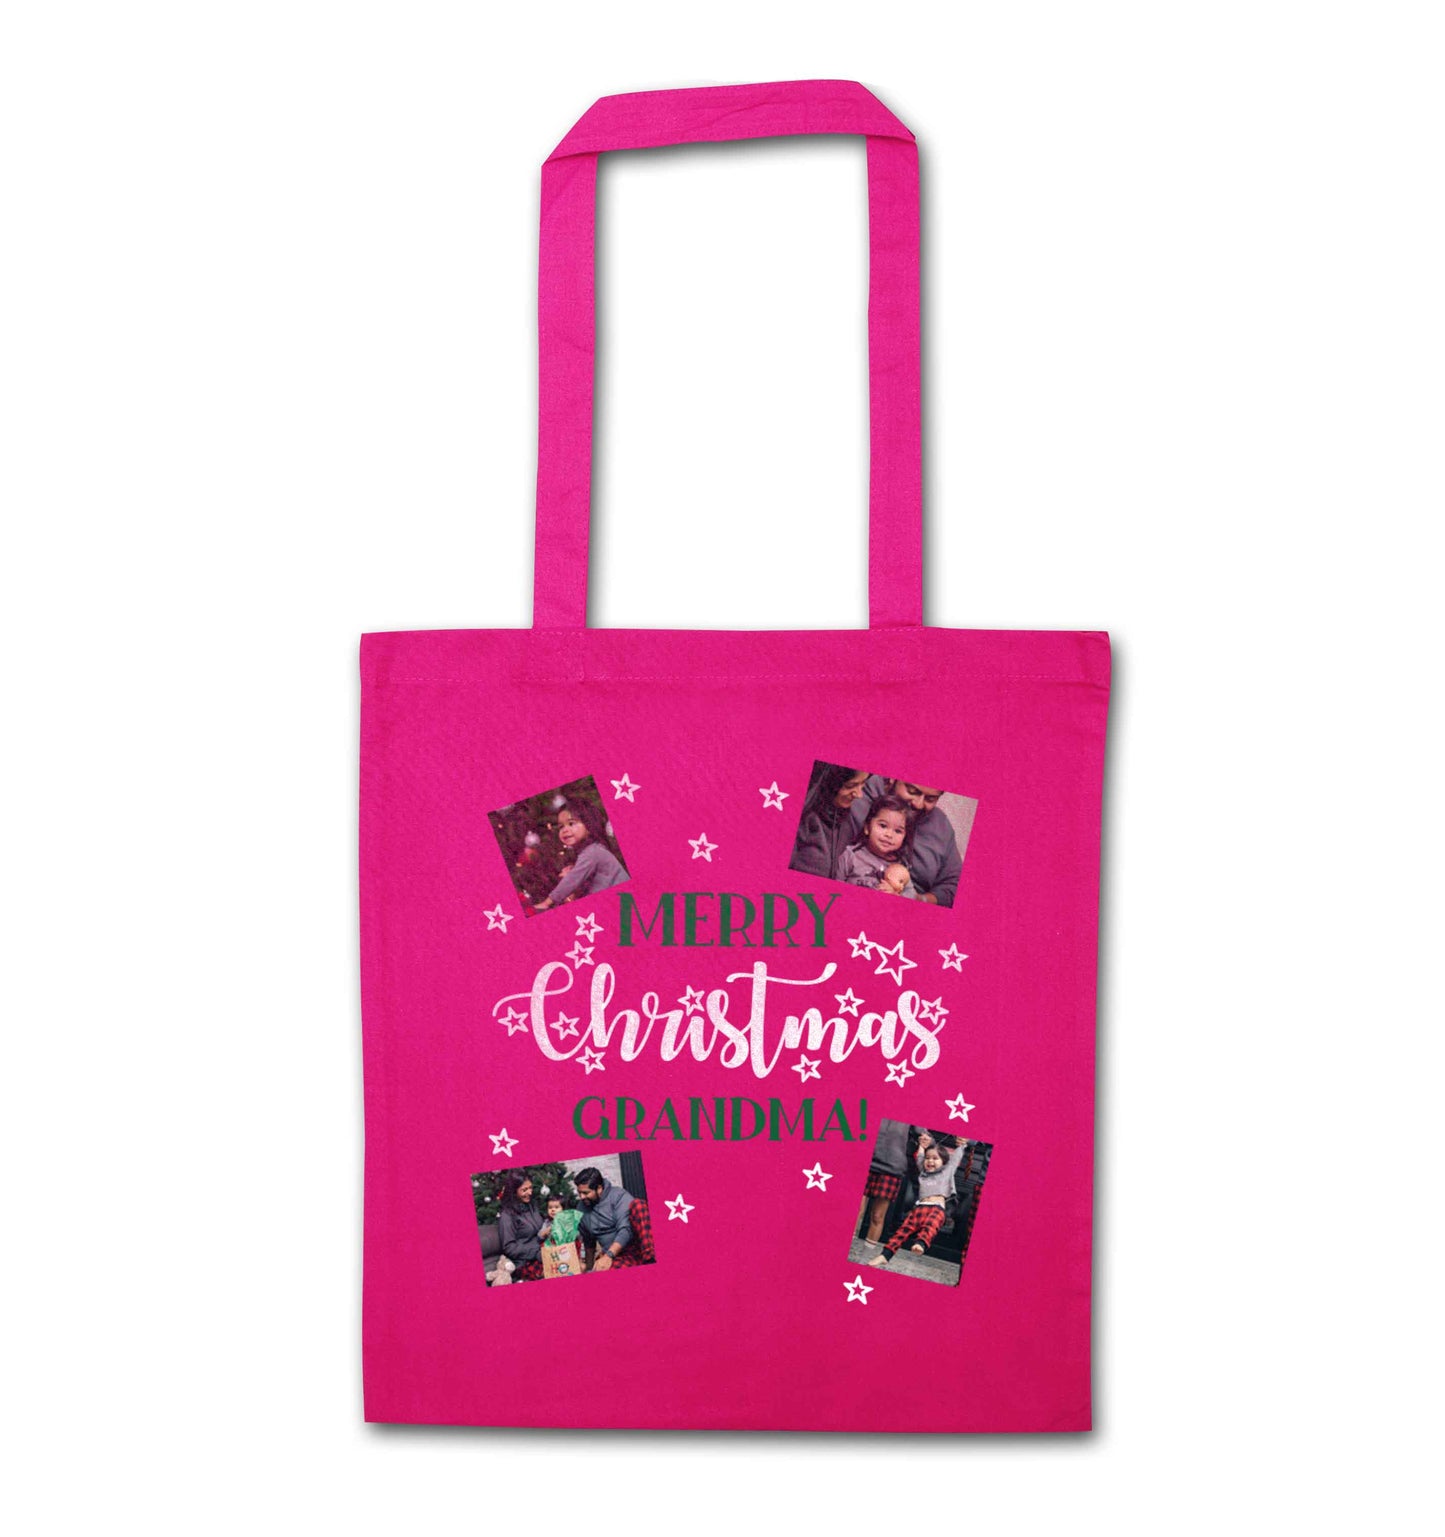 Merry Christmas grandma pink tote bag